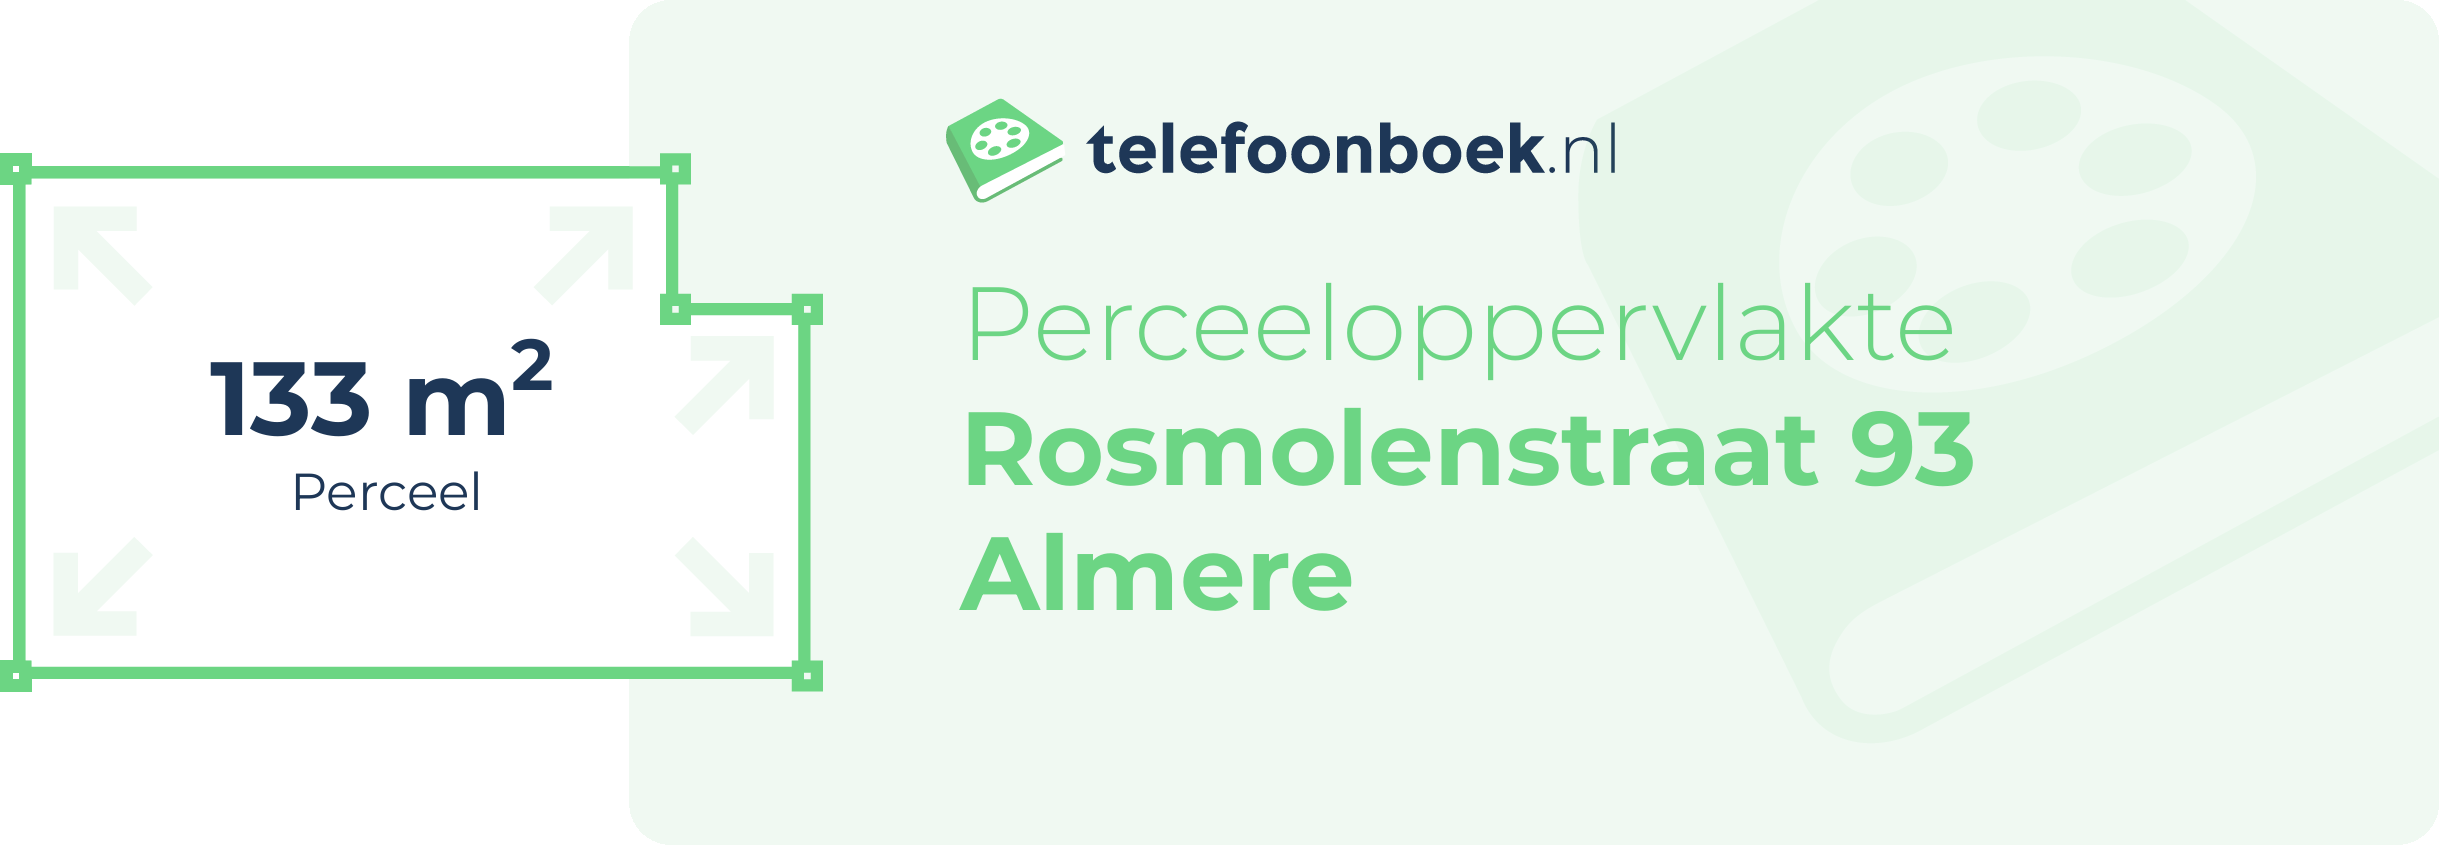 Perceeloppervlakte Rosmolenstraat 93 Almere